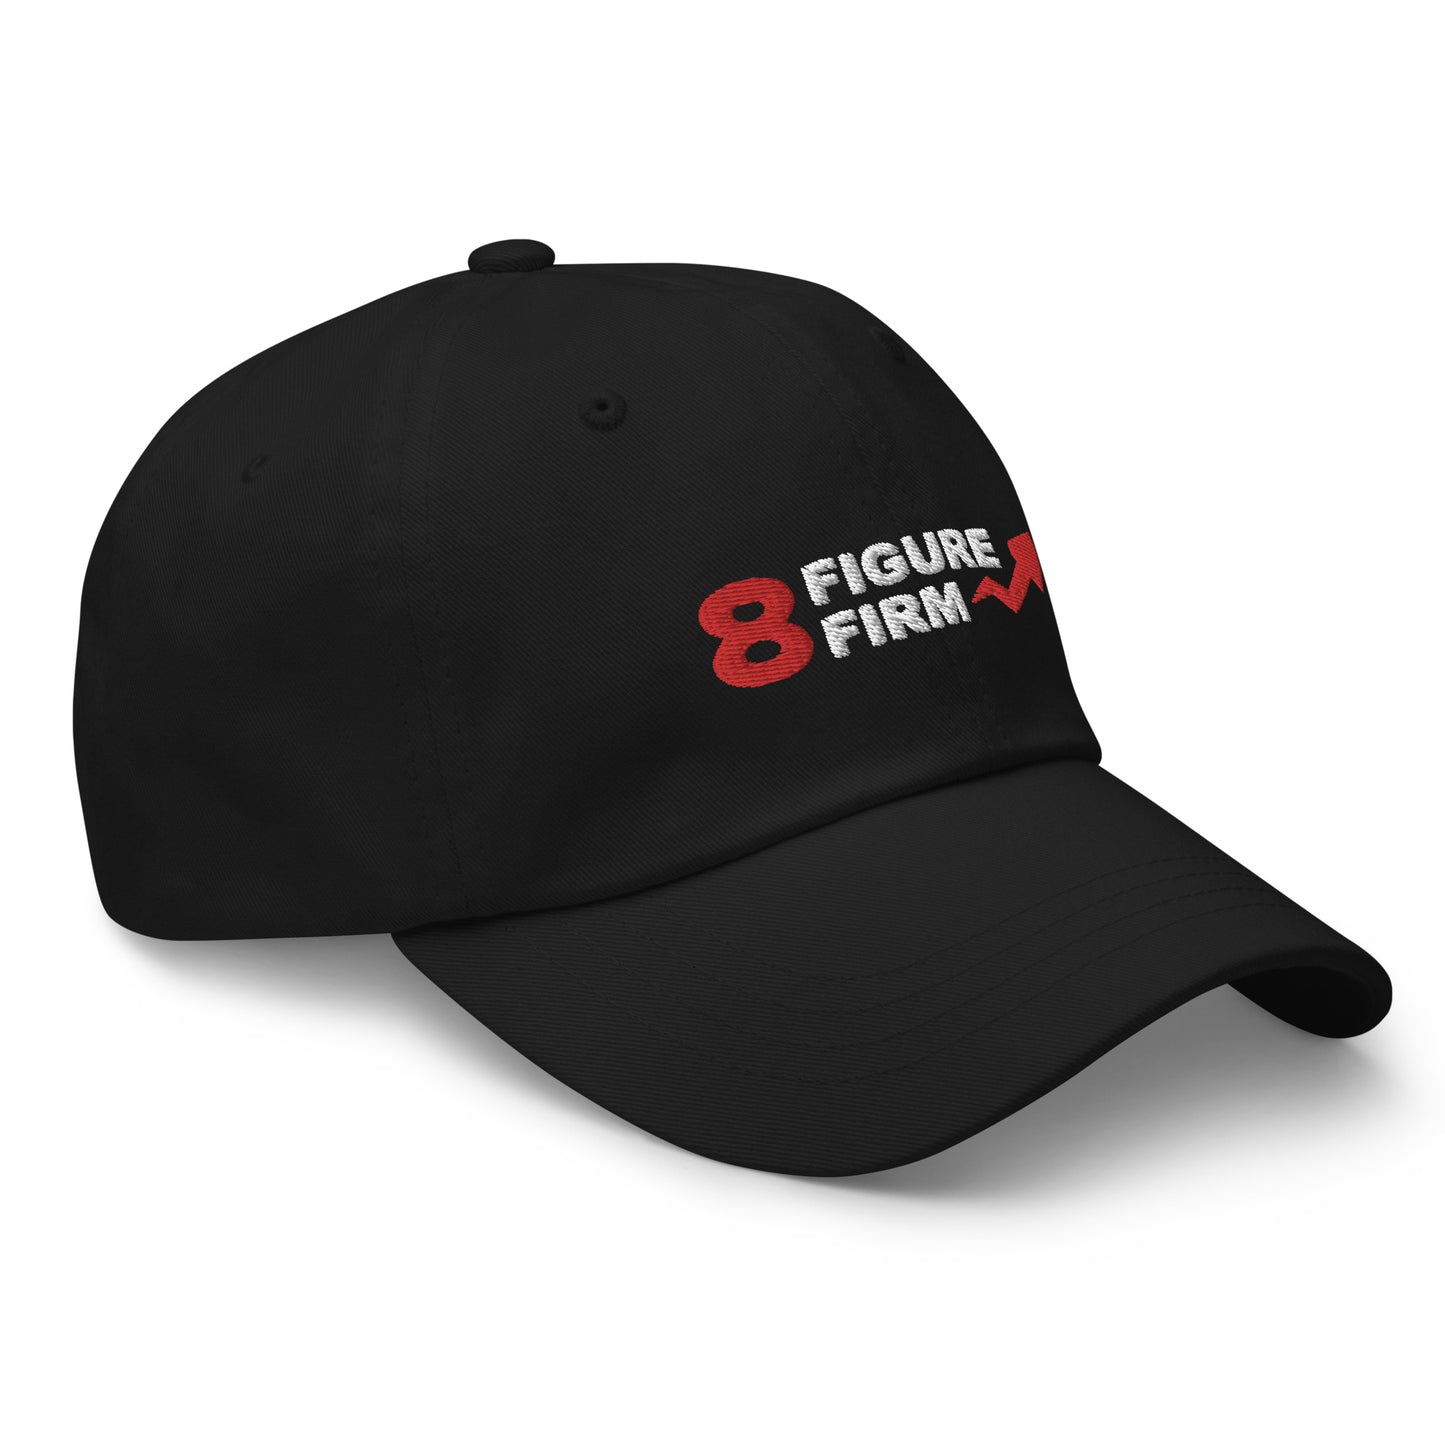 8 Figure Firm hat